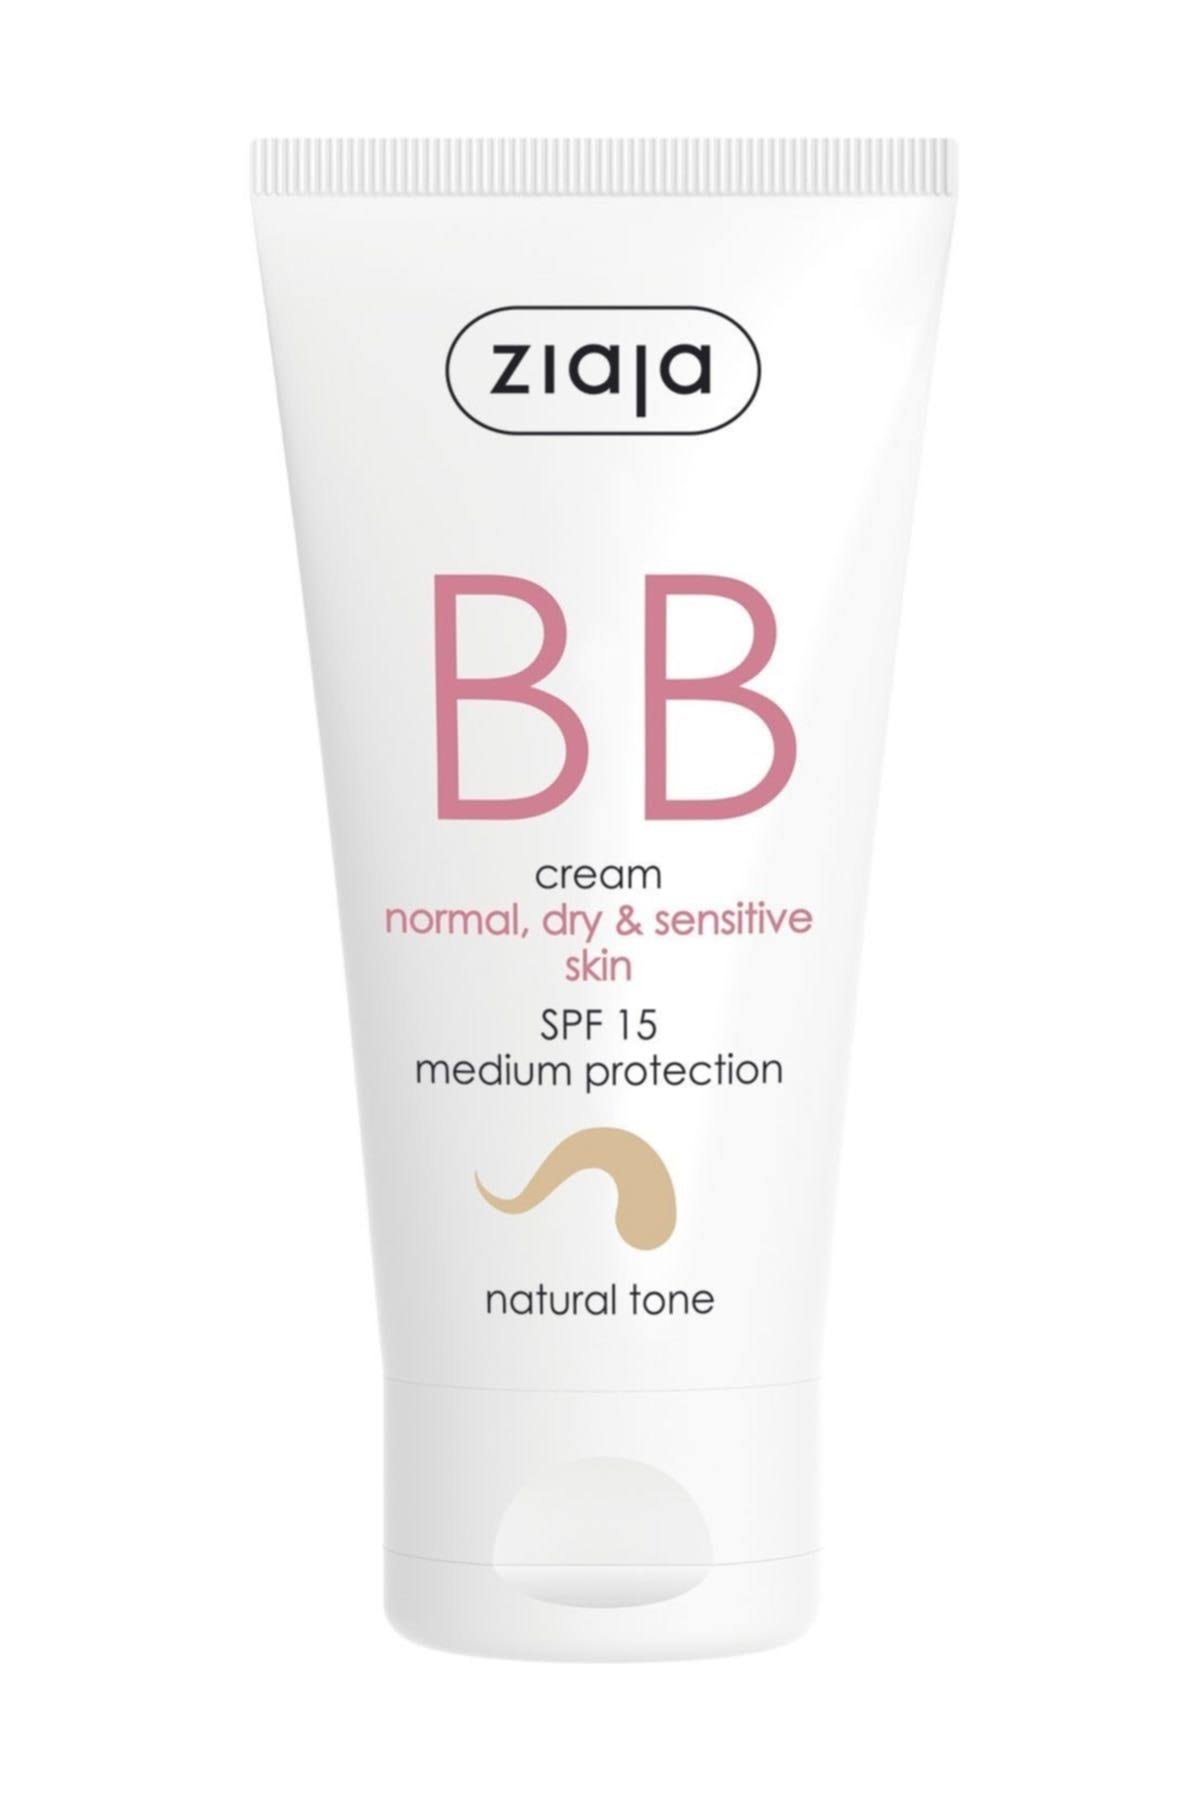 Ziaja Bb Cream Normal, Dry and Sensitive Skin Spf15 Natural Tone 50ml